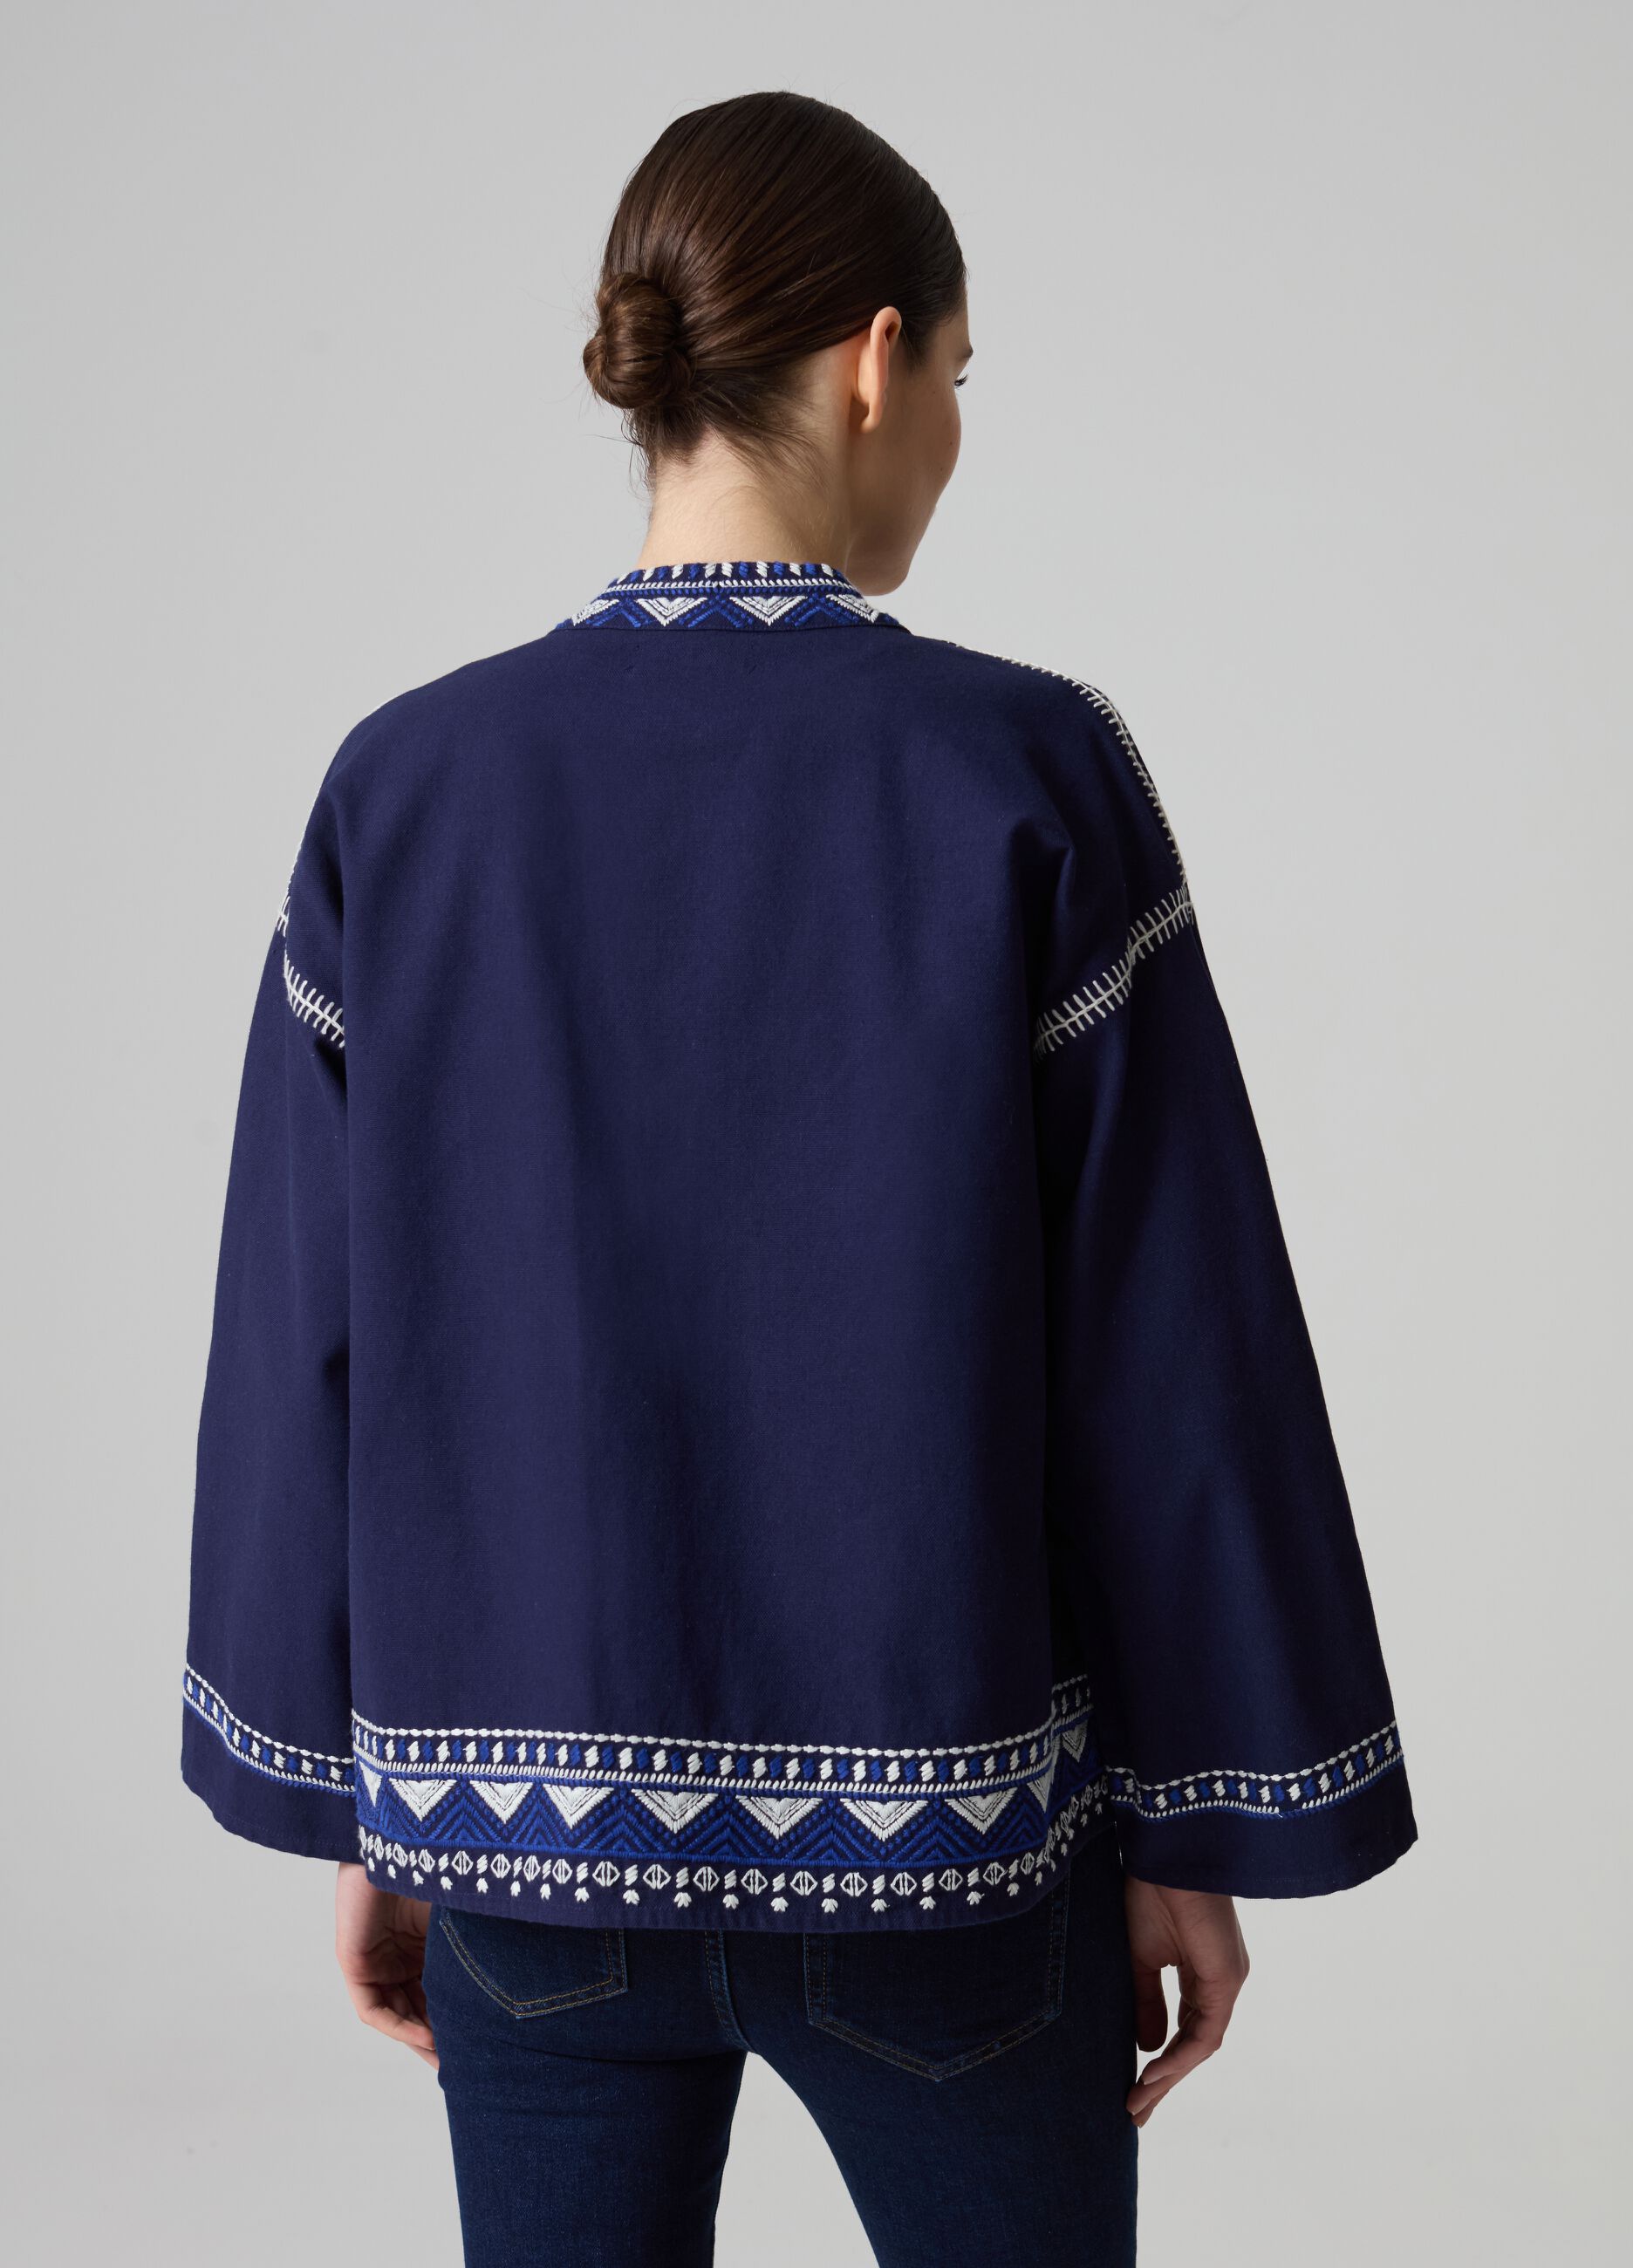 Chaqueta tipo kimono con aplicaciones étnicas